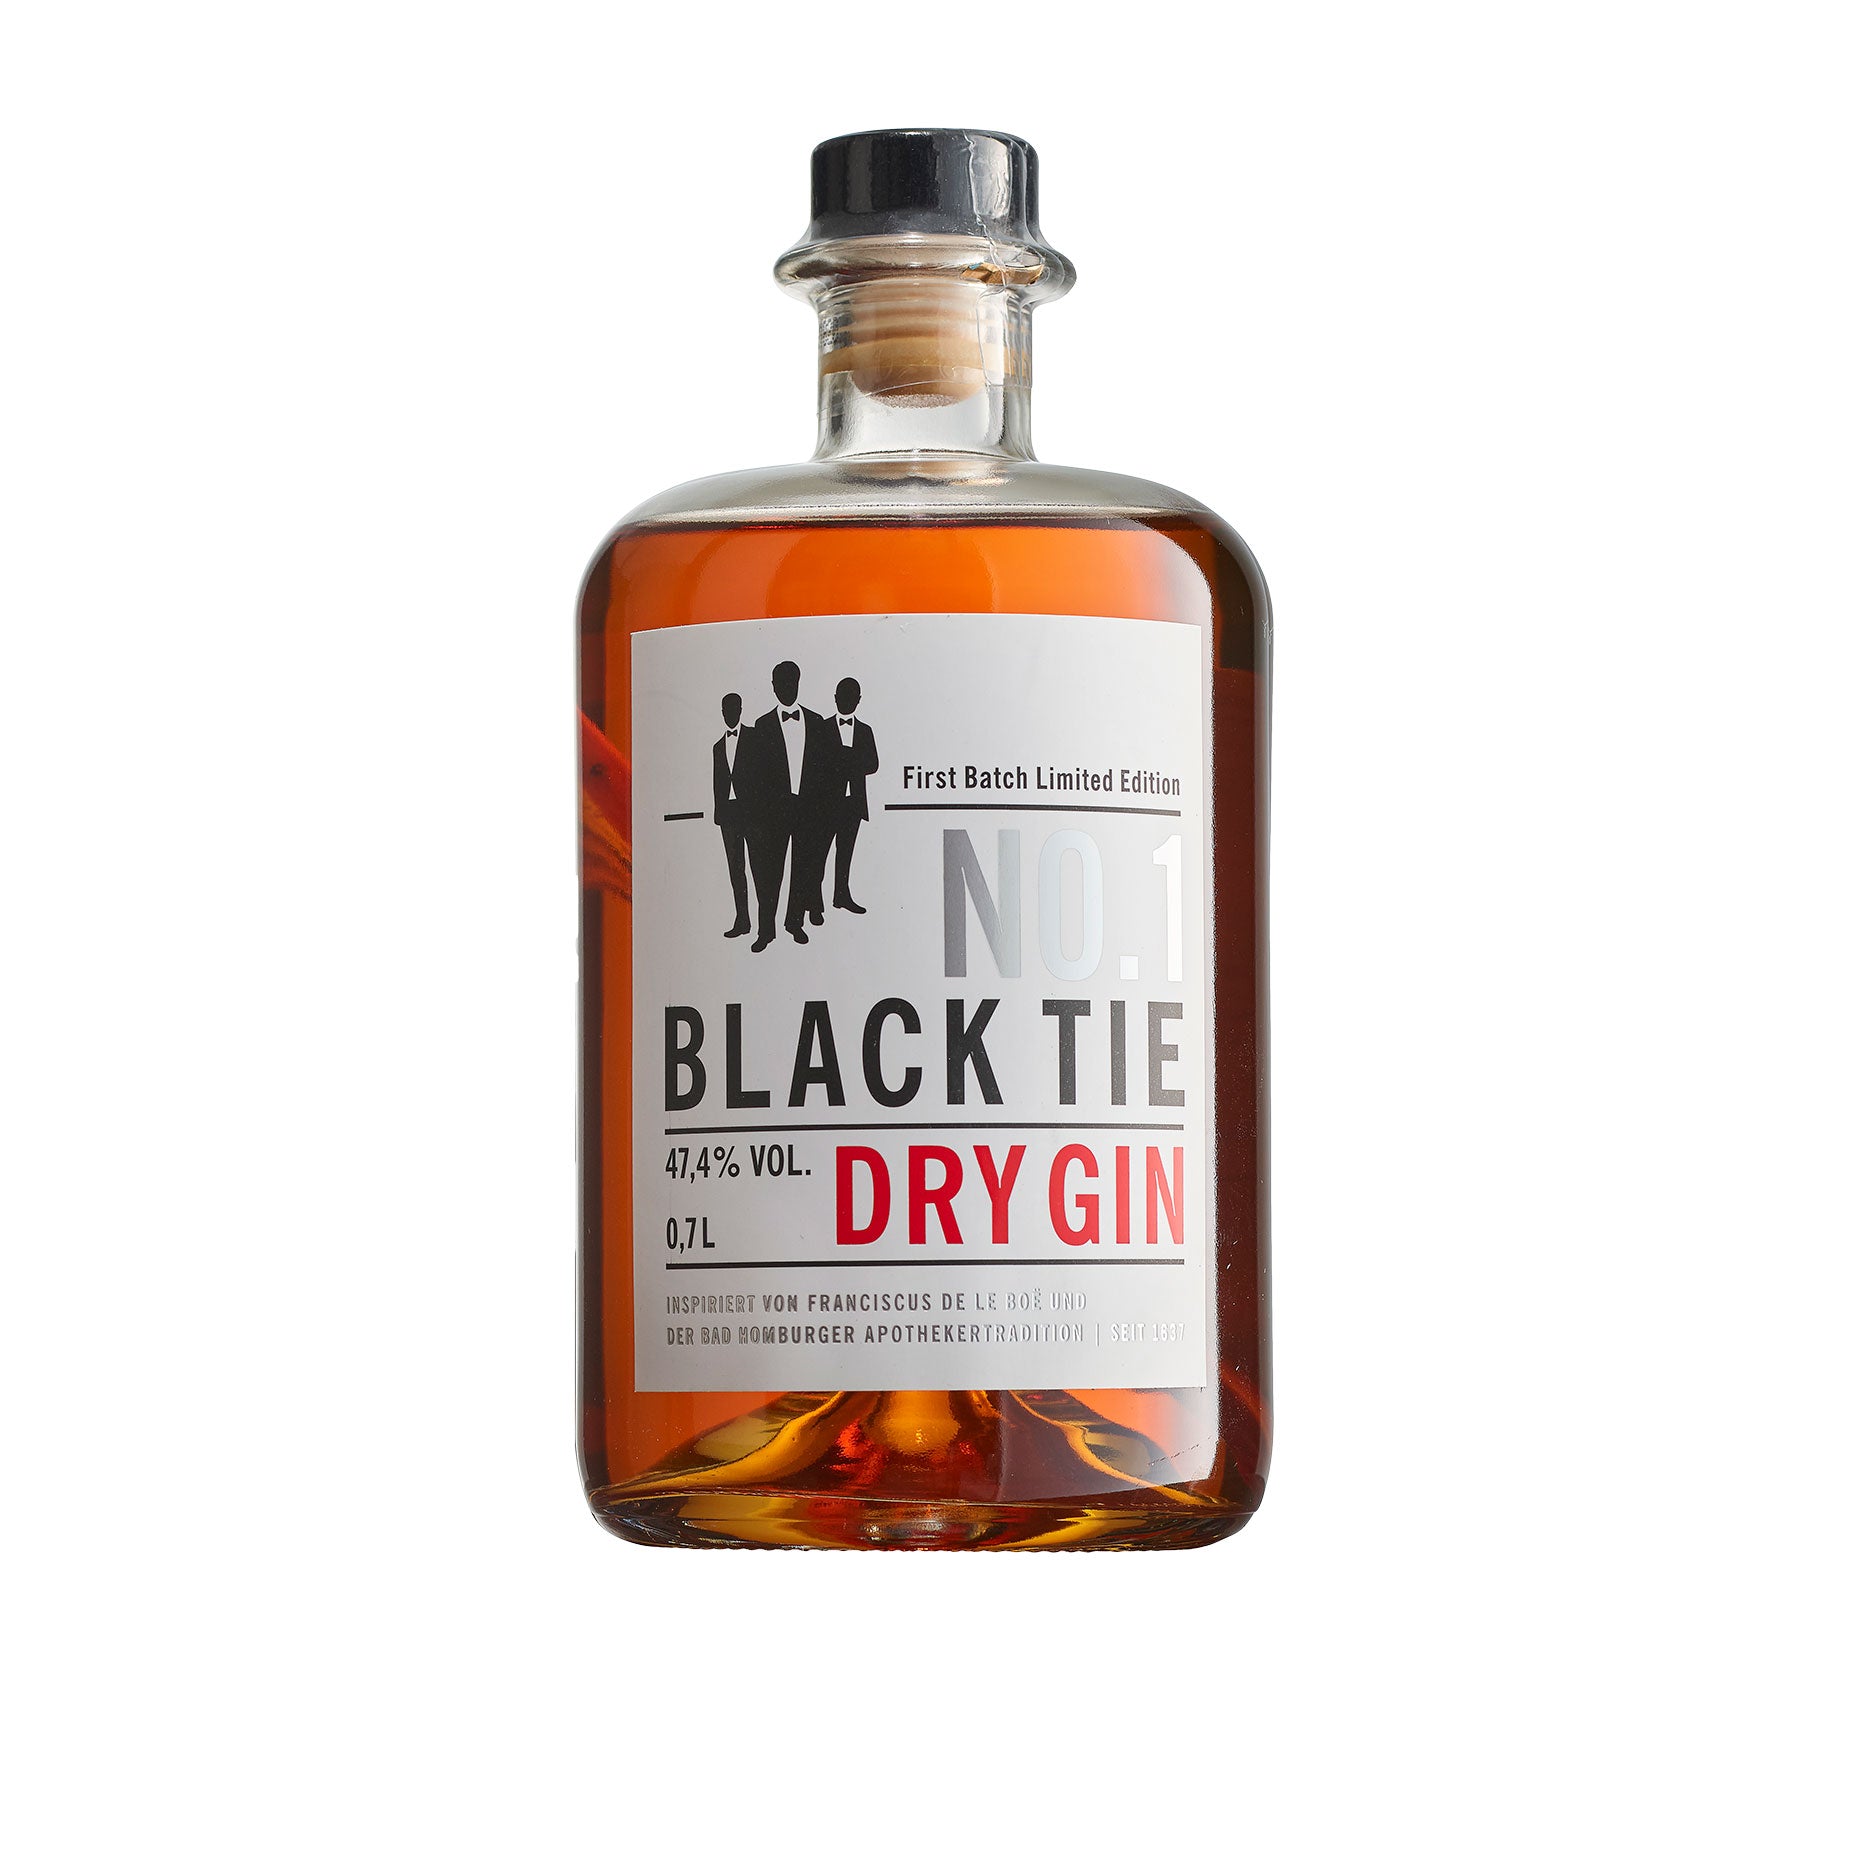 Black Tie Dry Gin No. 1